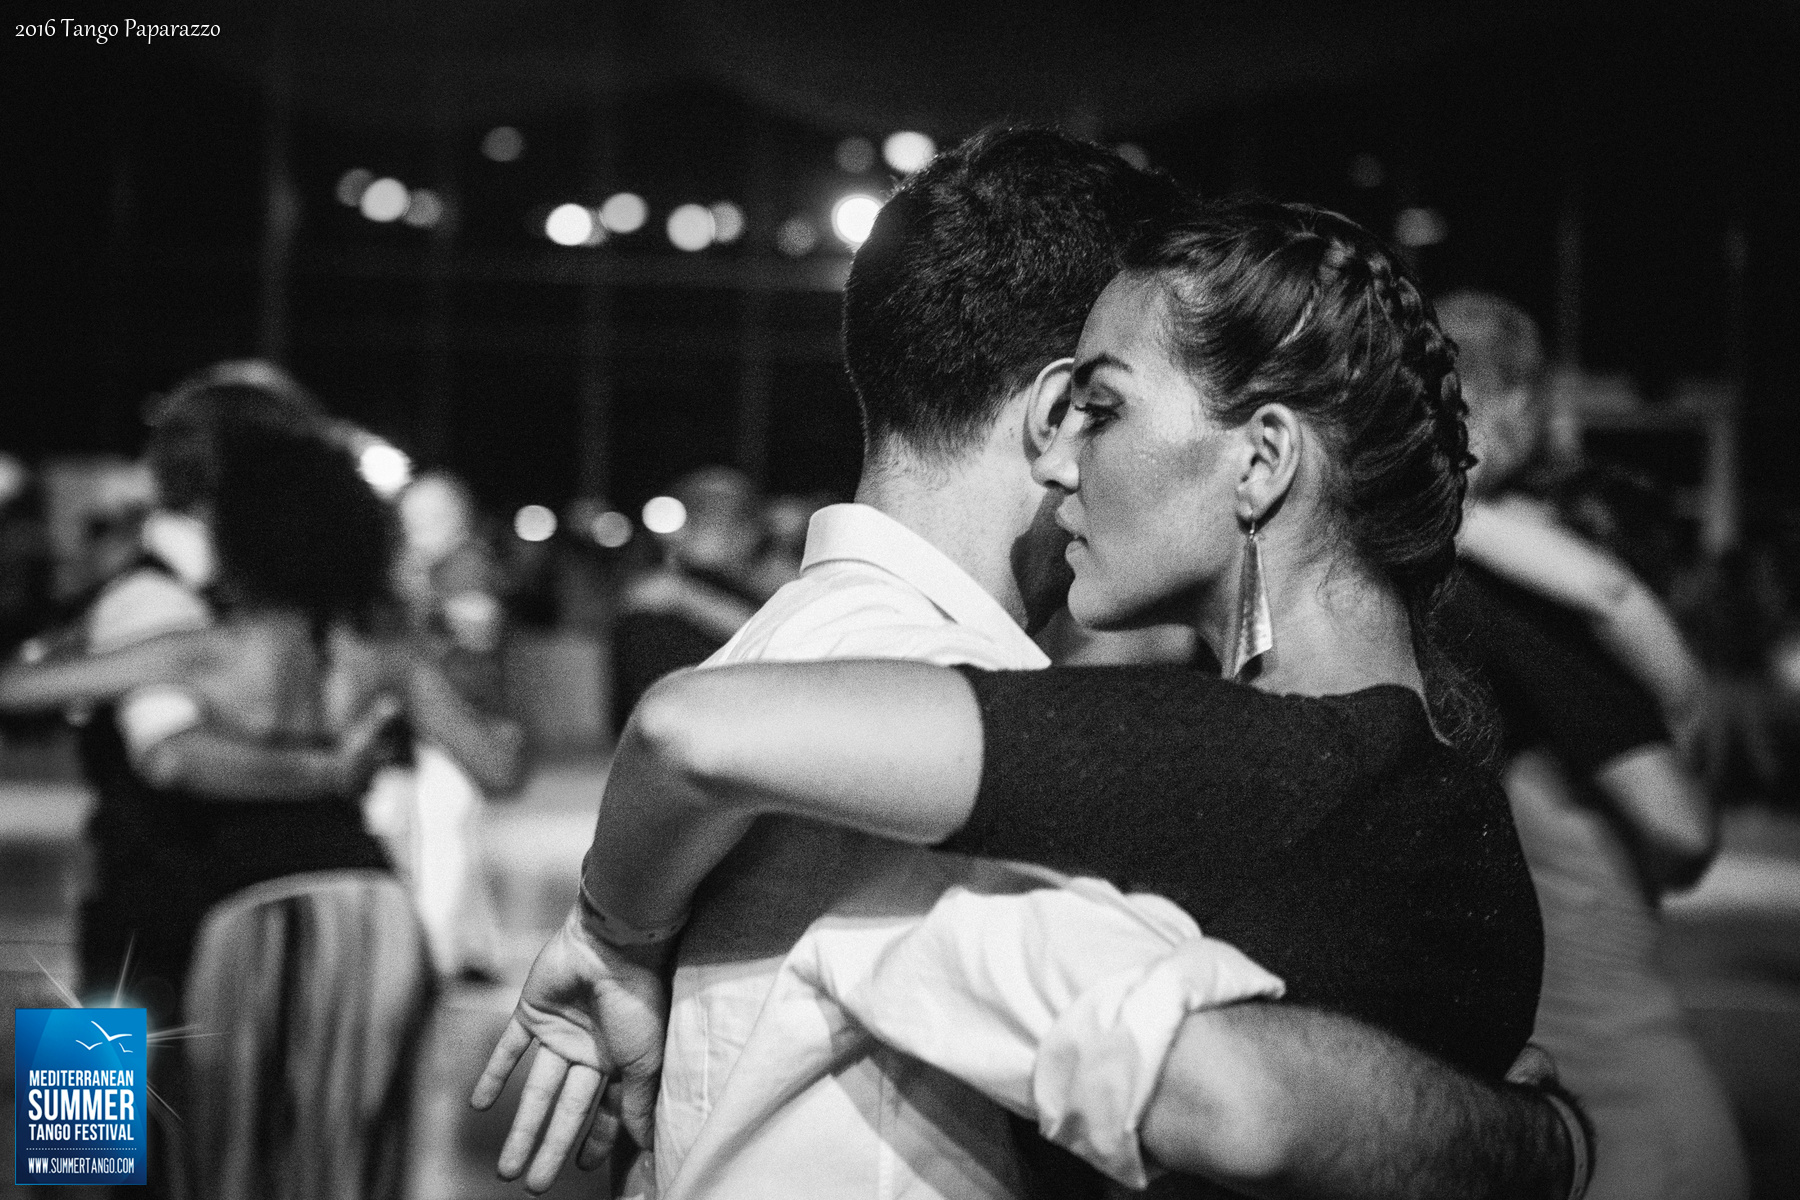 Mediterranean Summer Tango Festival 2016